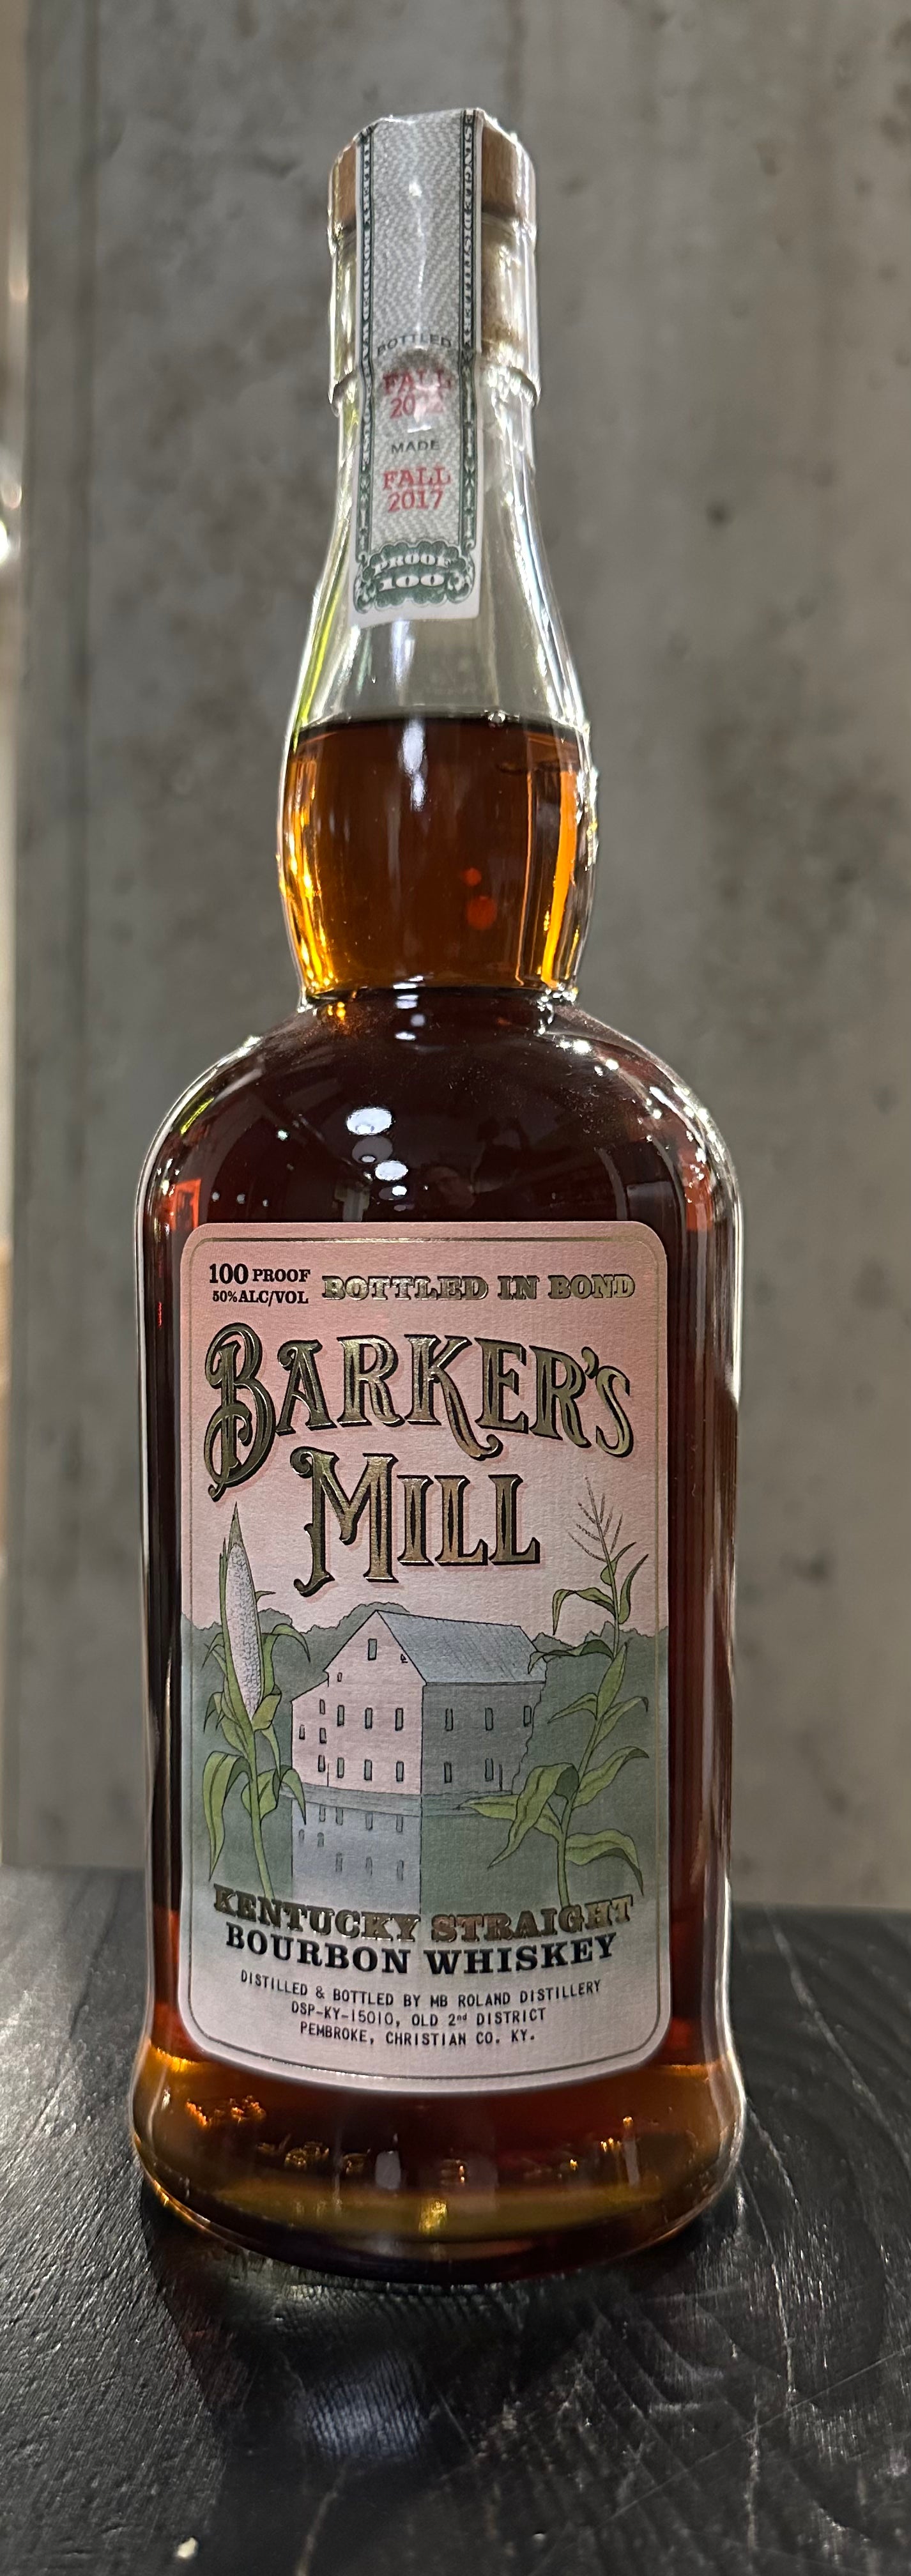 MB Roland "Barker's Mill" Ketucky Straight Bourbon Whiskey